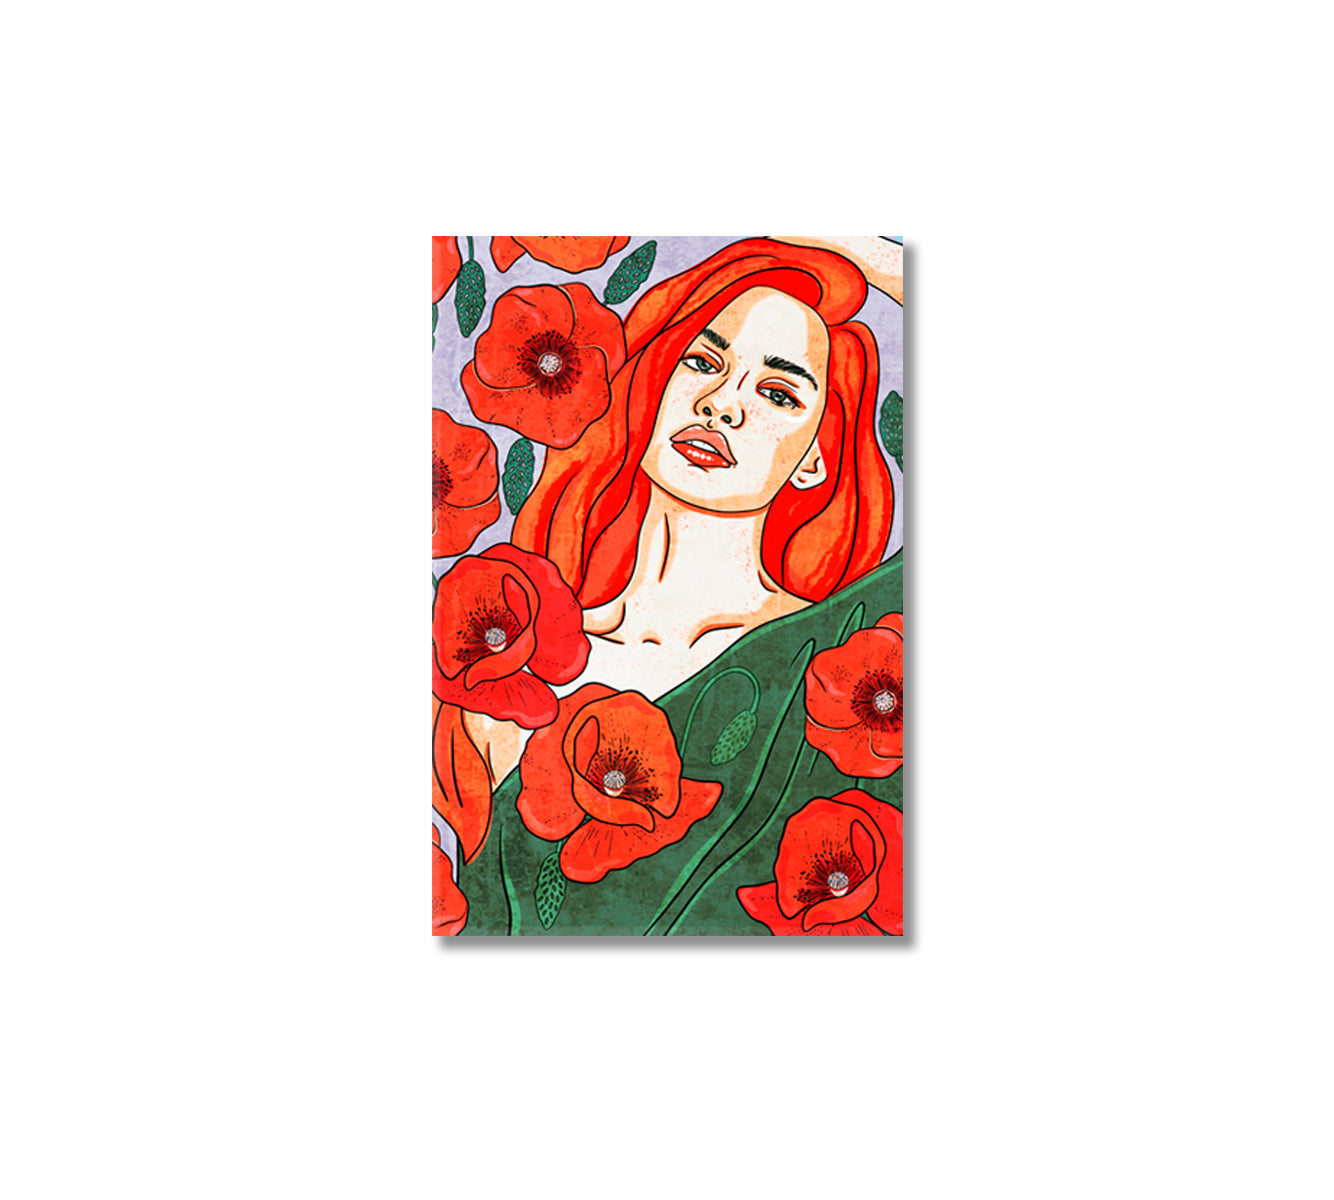 Woman with Poppy Flowers Art Canvas-Canvas Print-CetArt-1 panel-16x24 inches-CetArt